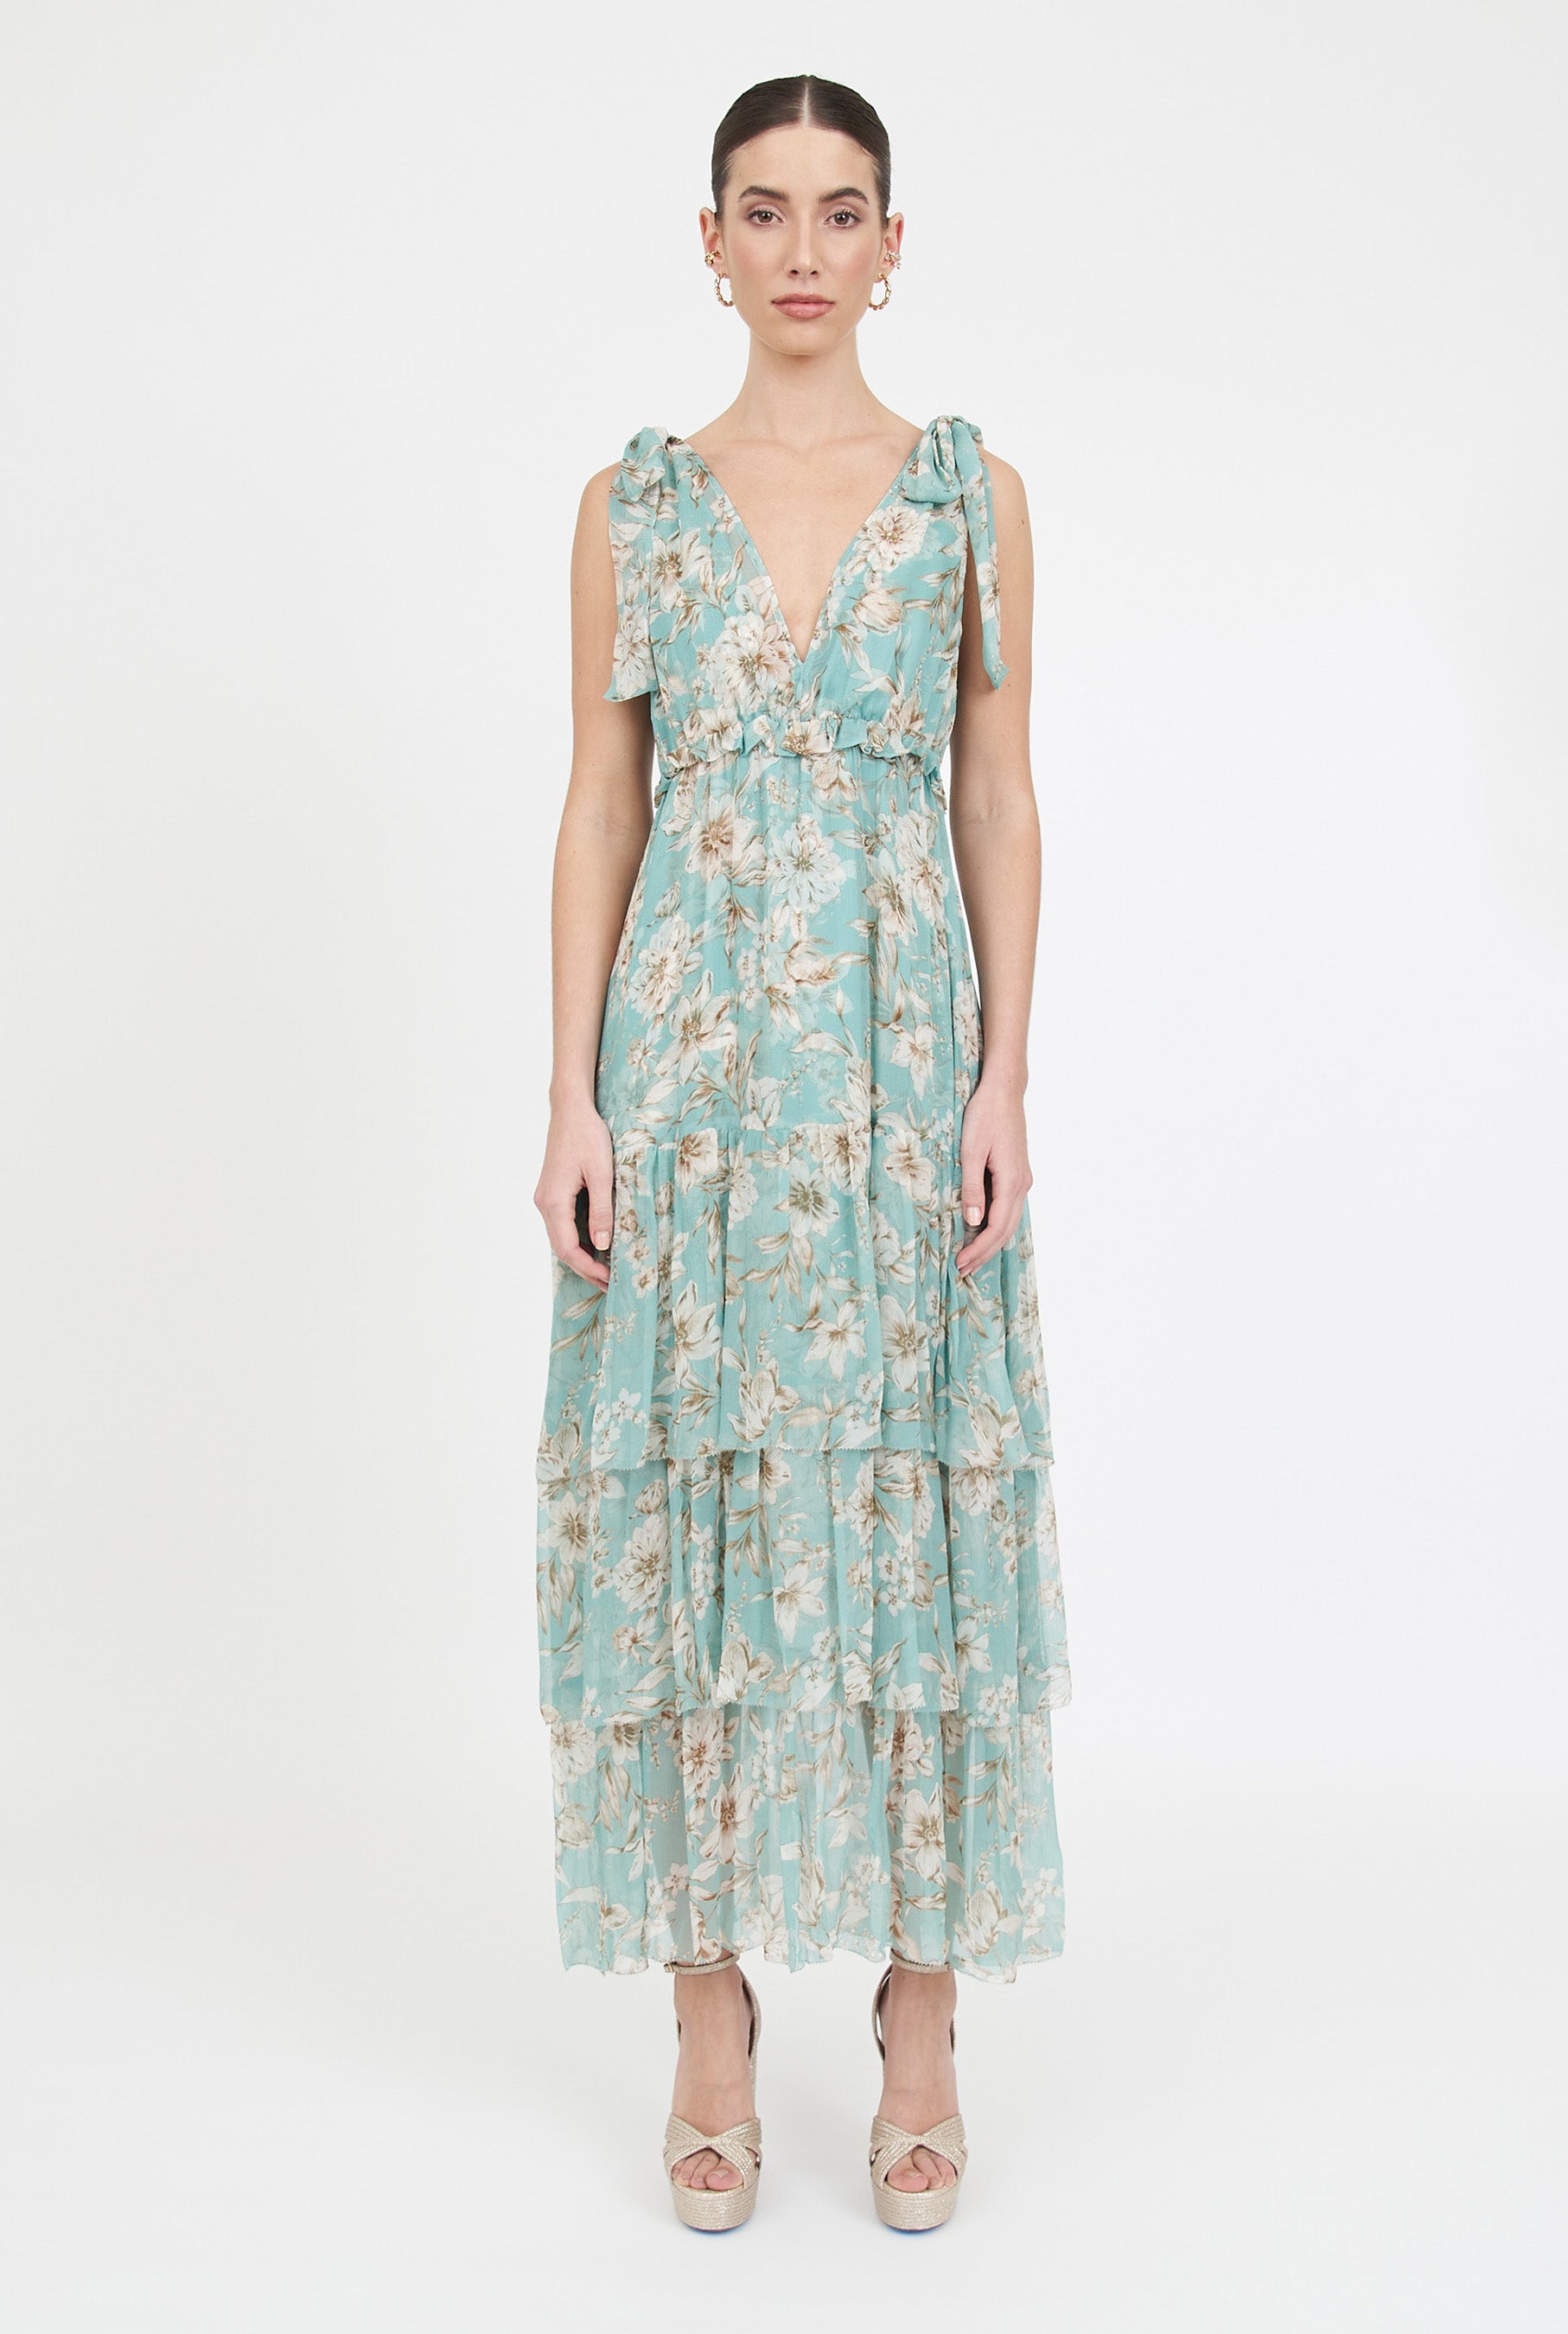 Alexa Dress - Turquoise Magnolia